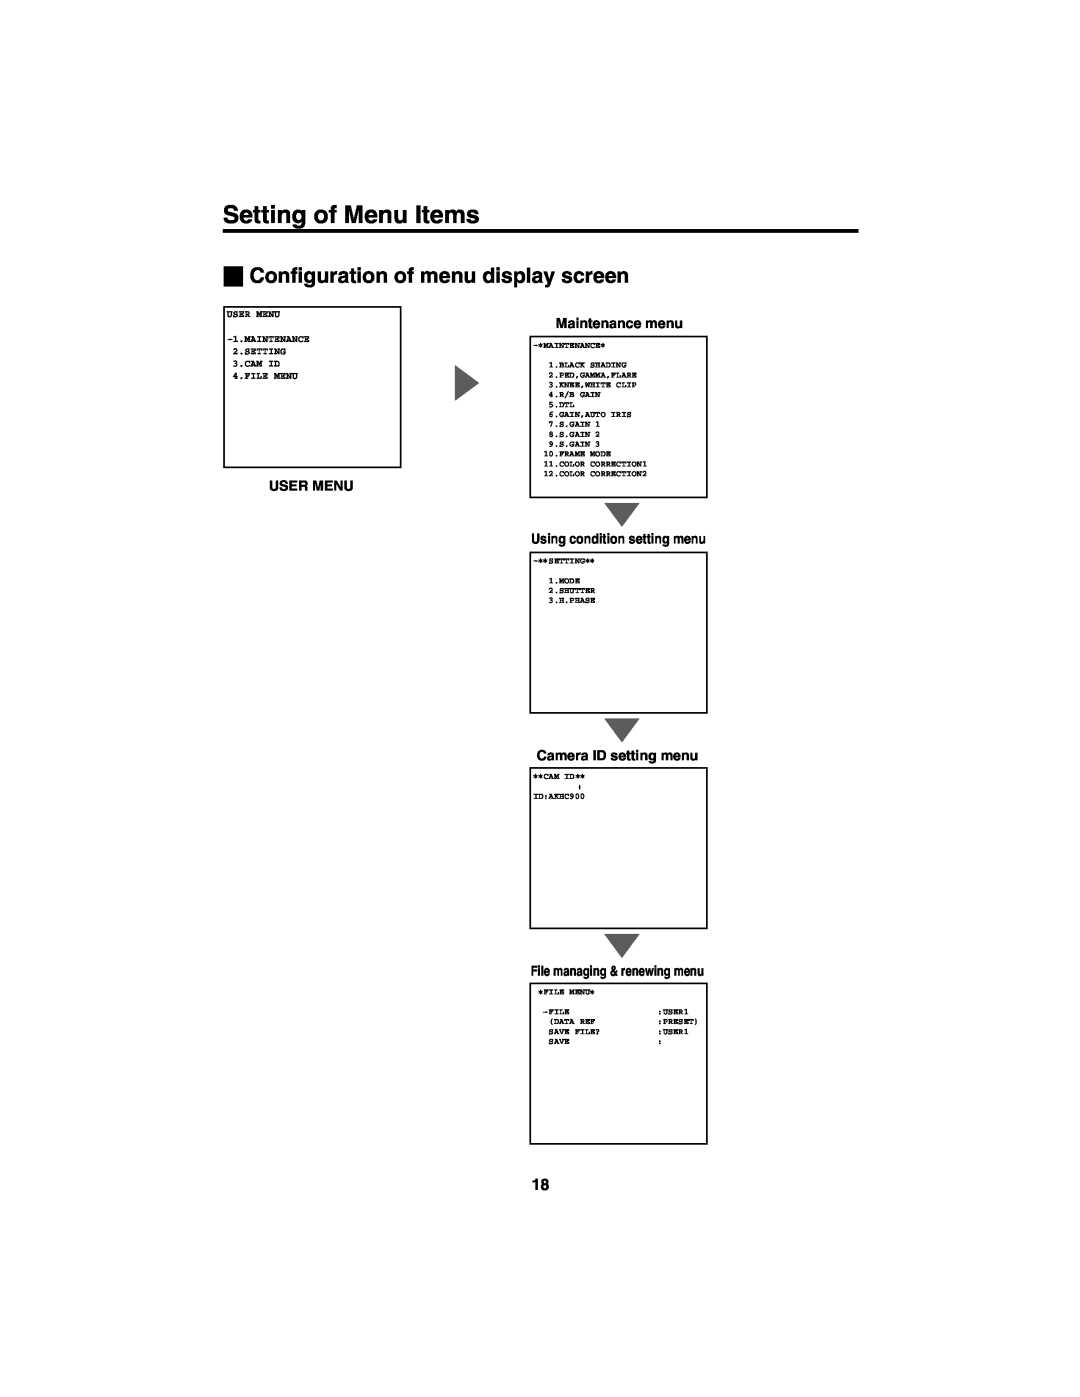 Panasonic AK-HC900 manual Setting of Menu Items, Configuration of menu display screen, User Menu, Maintenance menu 